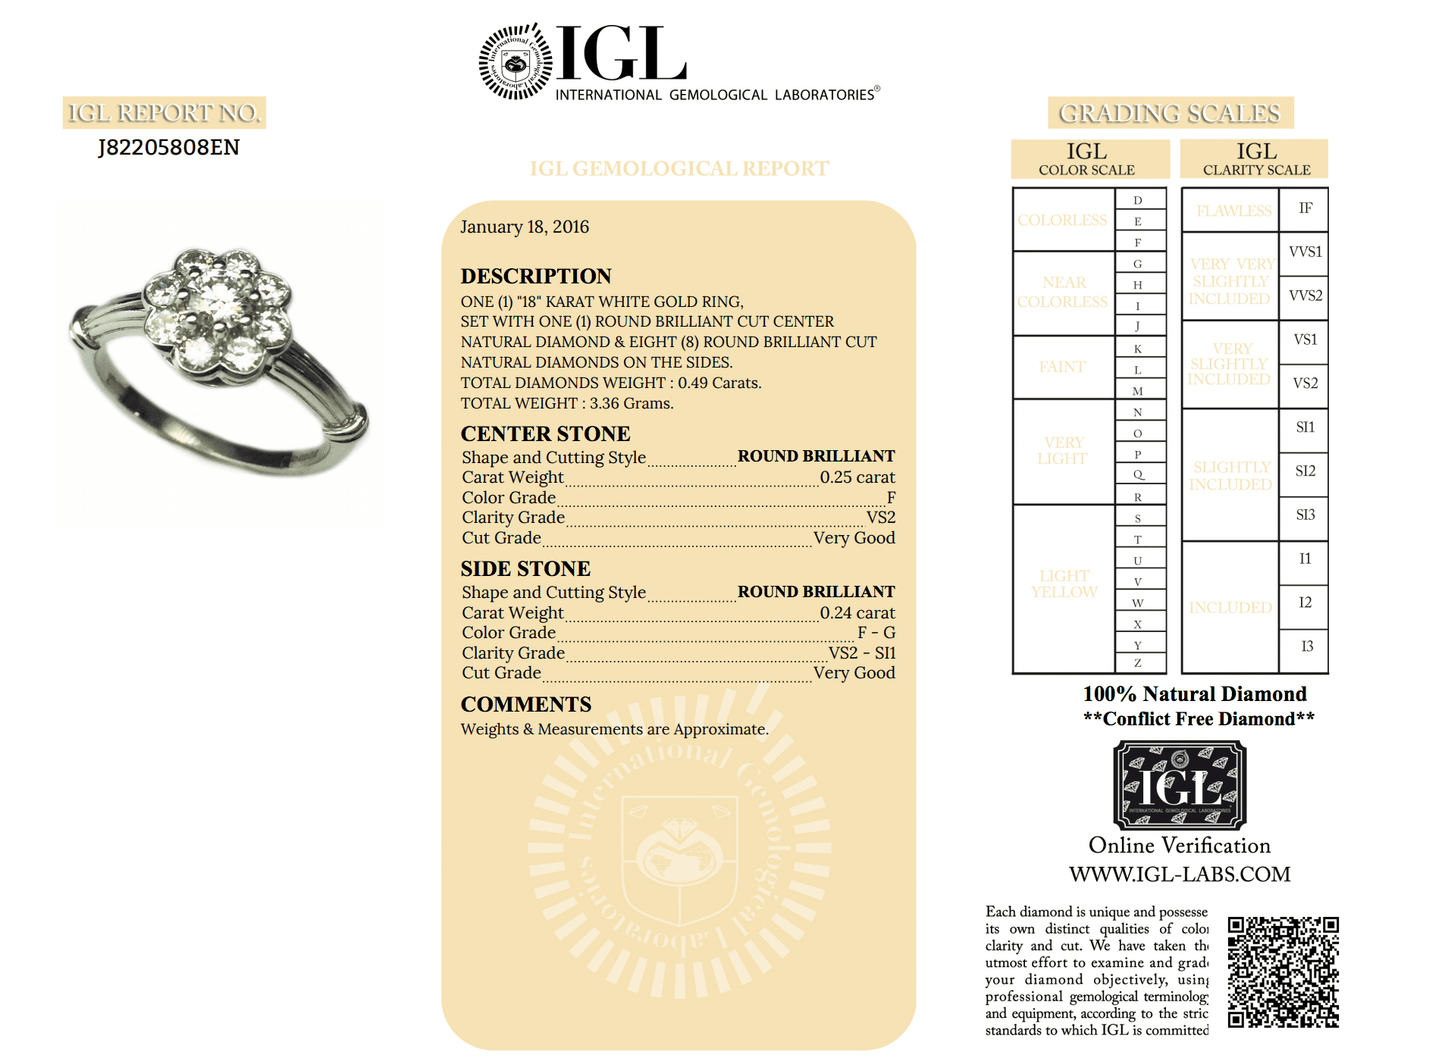 Diamond Daisy Cluster Ring